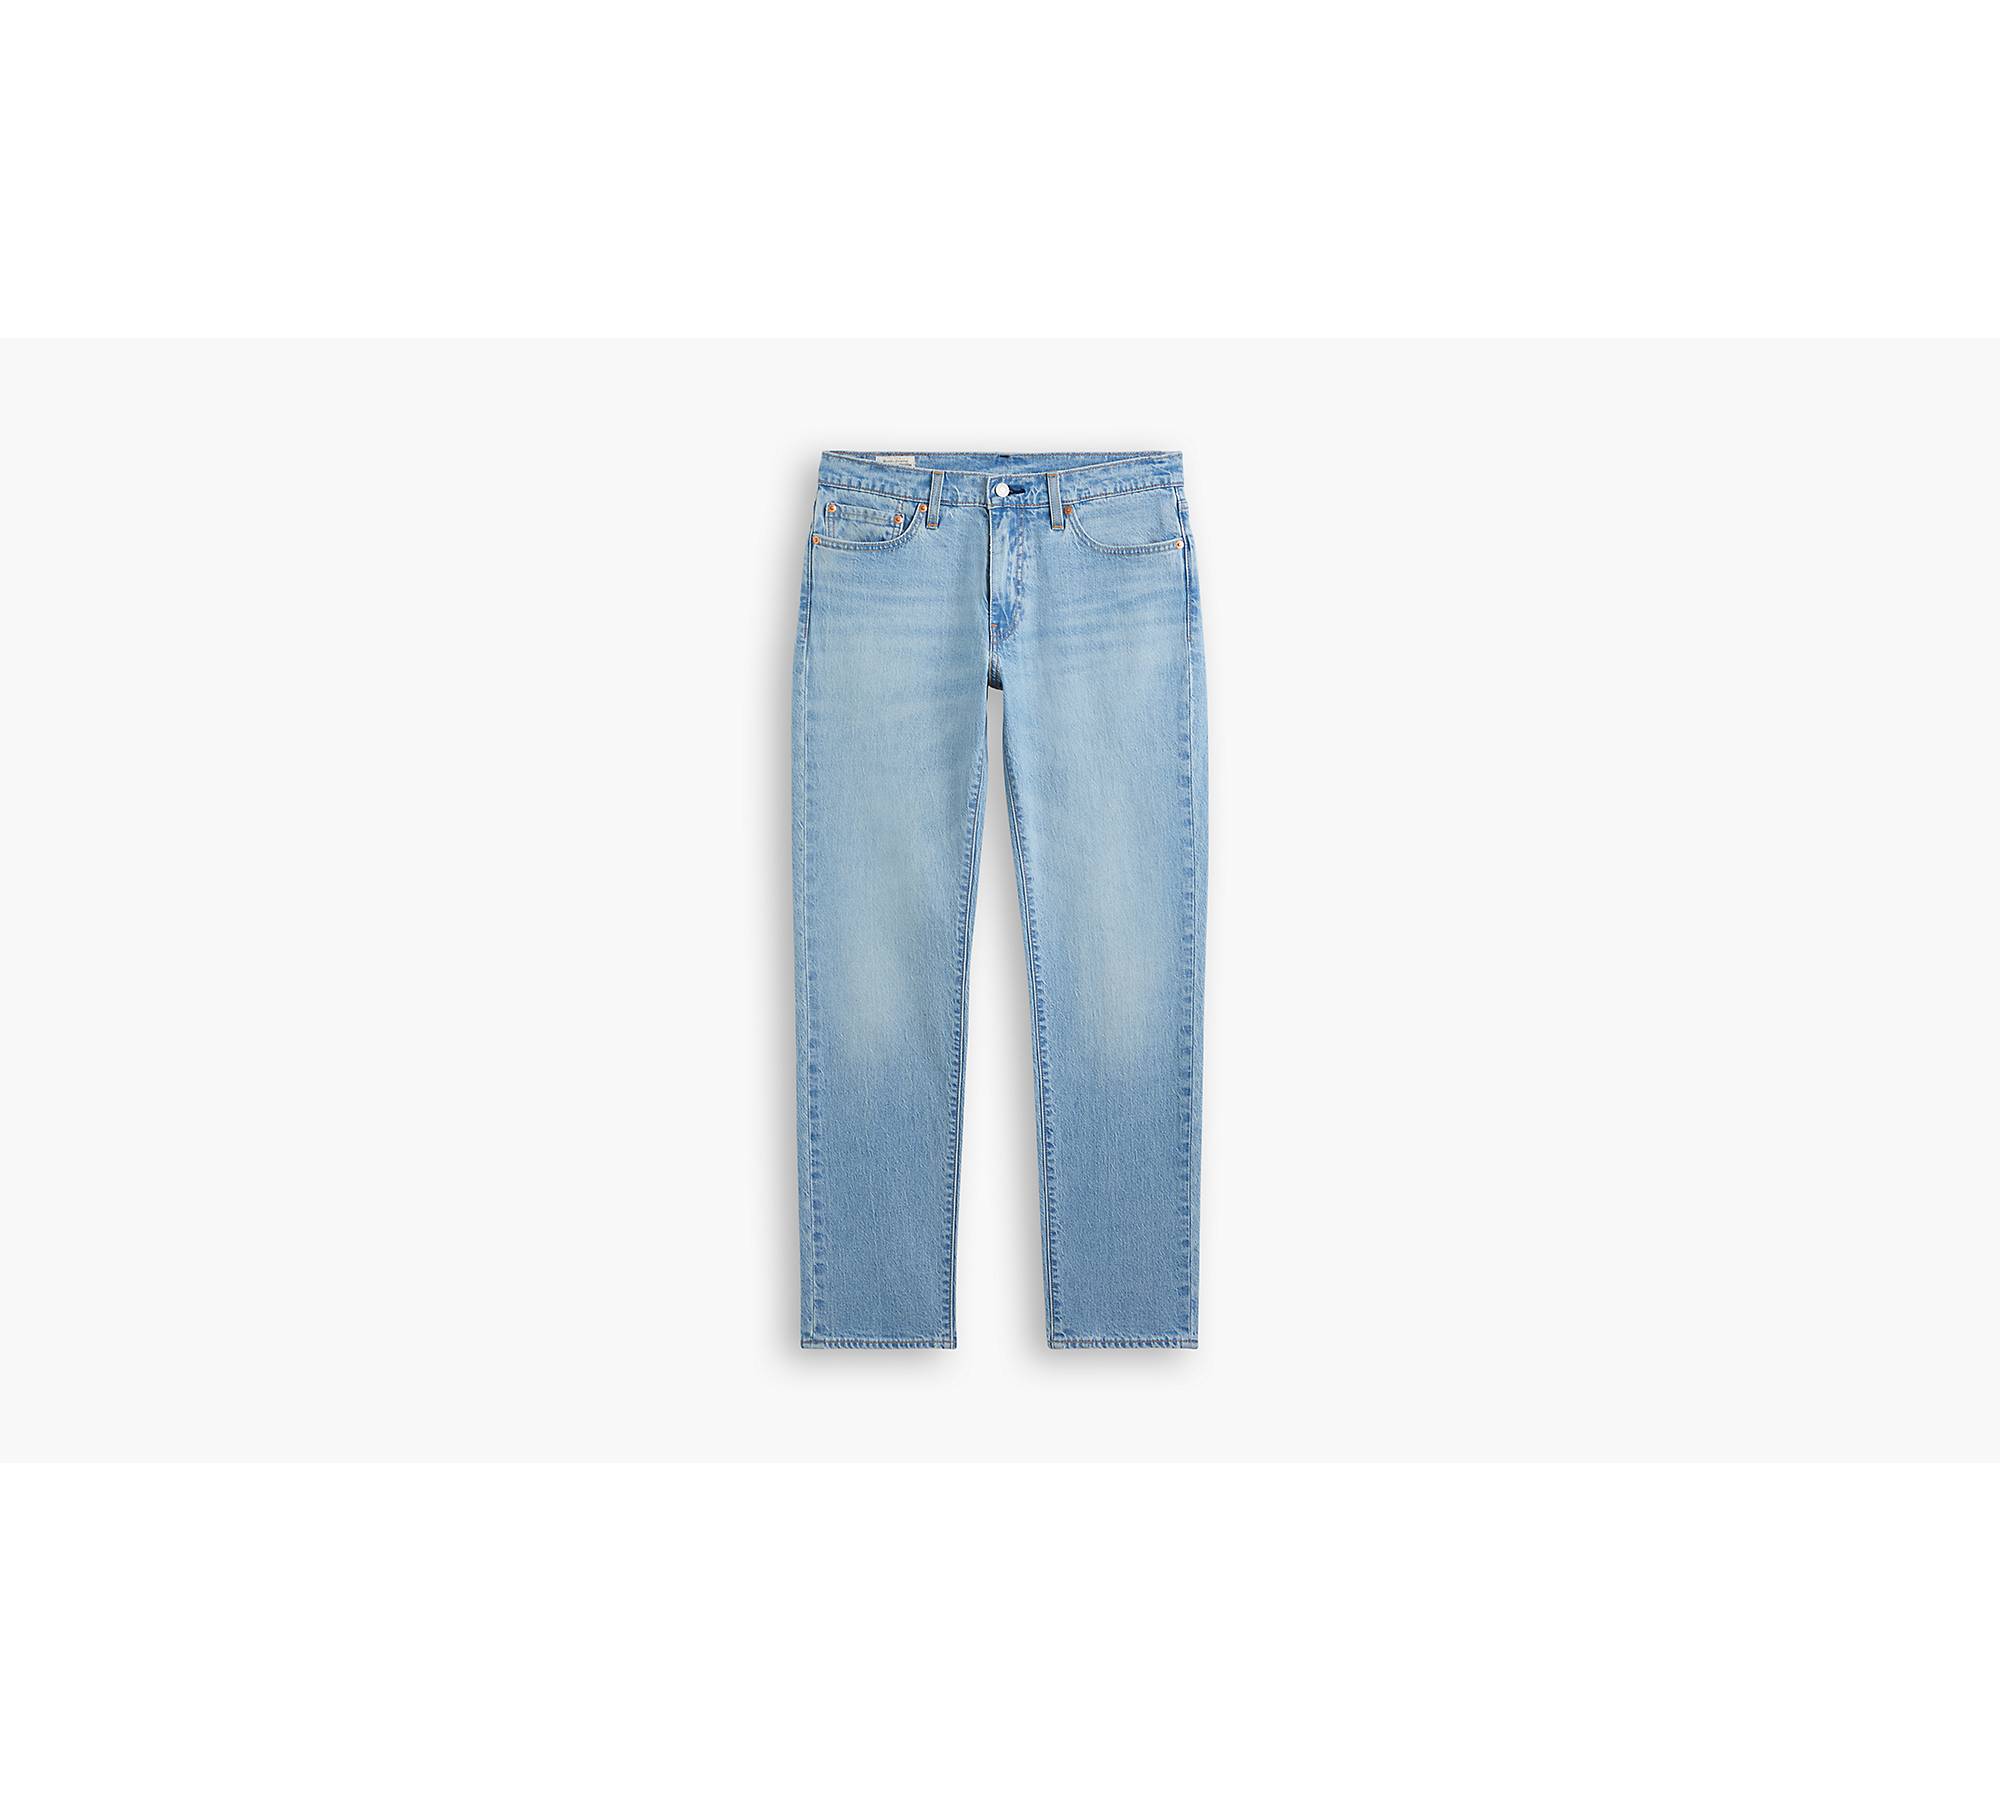 Jeans Light Wash Denim - Paul Smith Slim-Standard 13oz 'Unlucky Selvedge'  Light-Wash Denim Jeans Mens Light Wash Denim • Daniel Herran